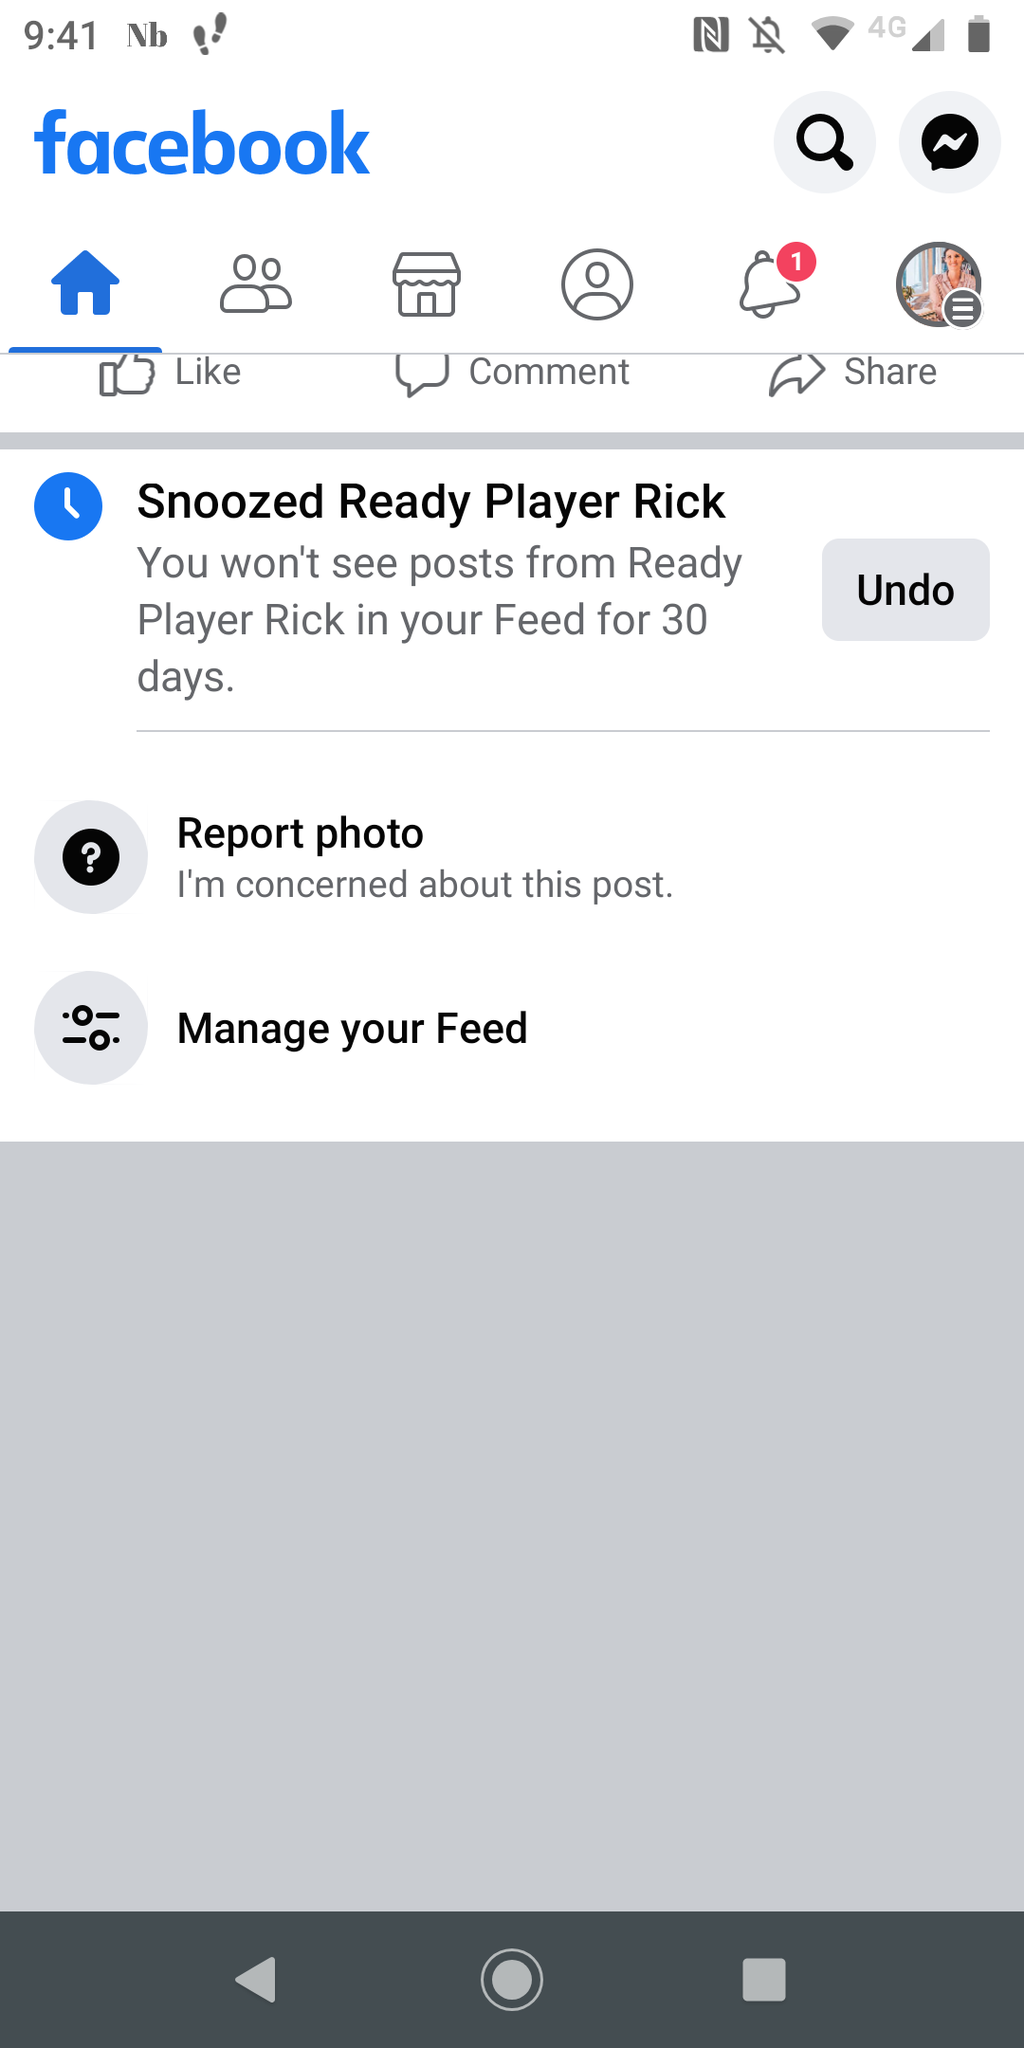 Facebook settings home screen